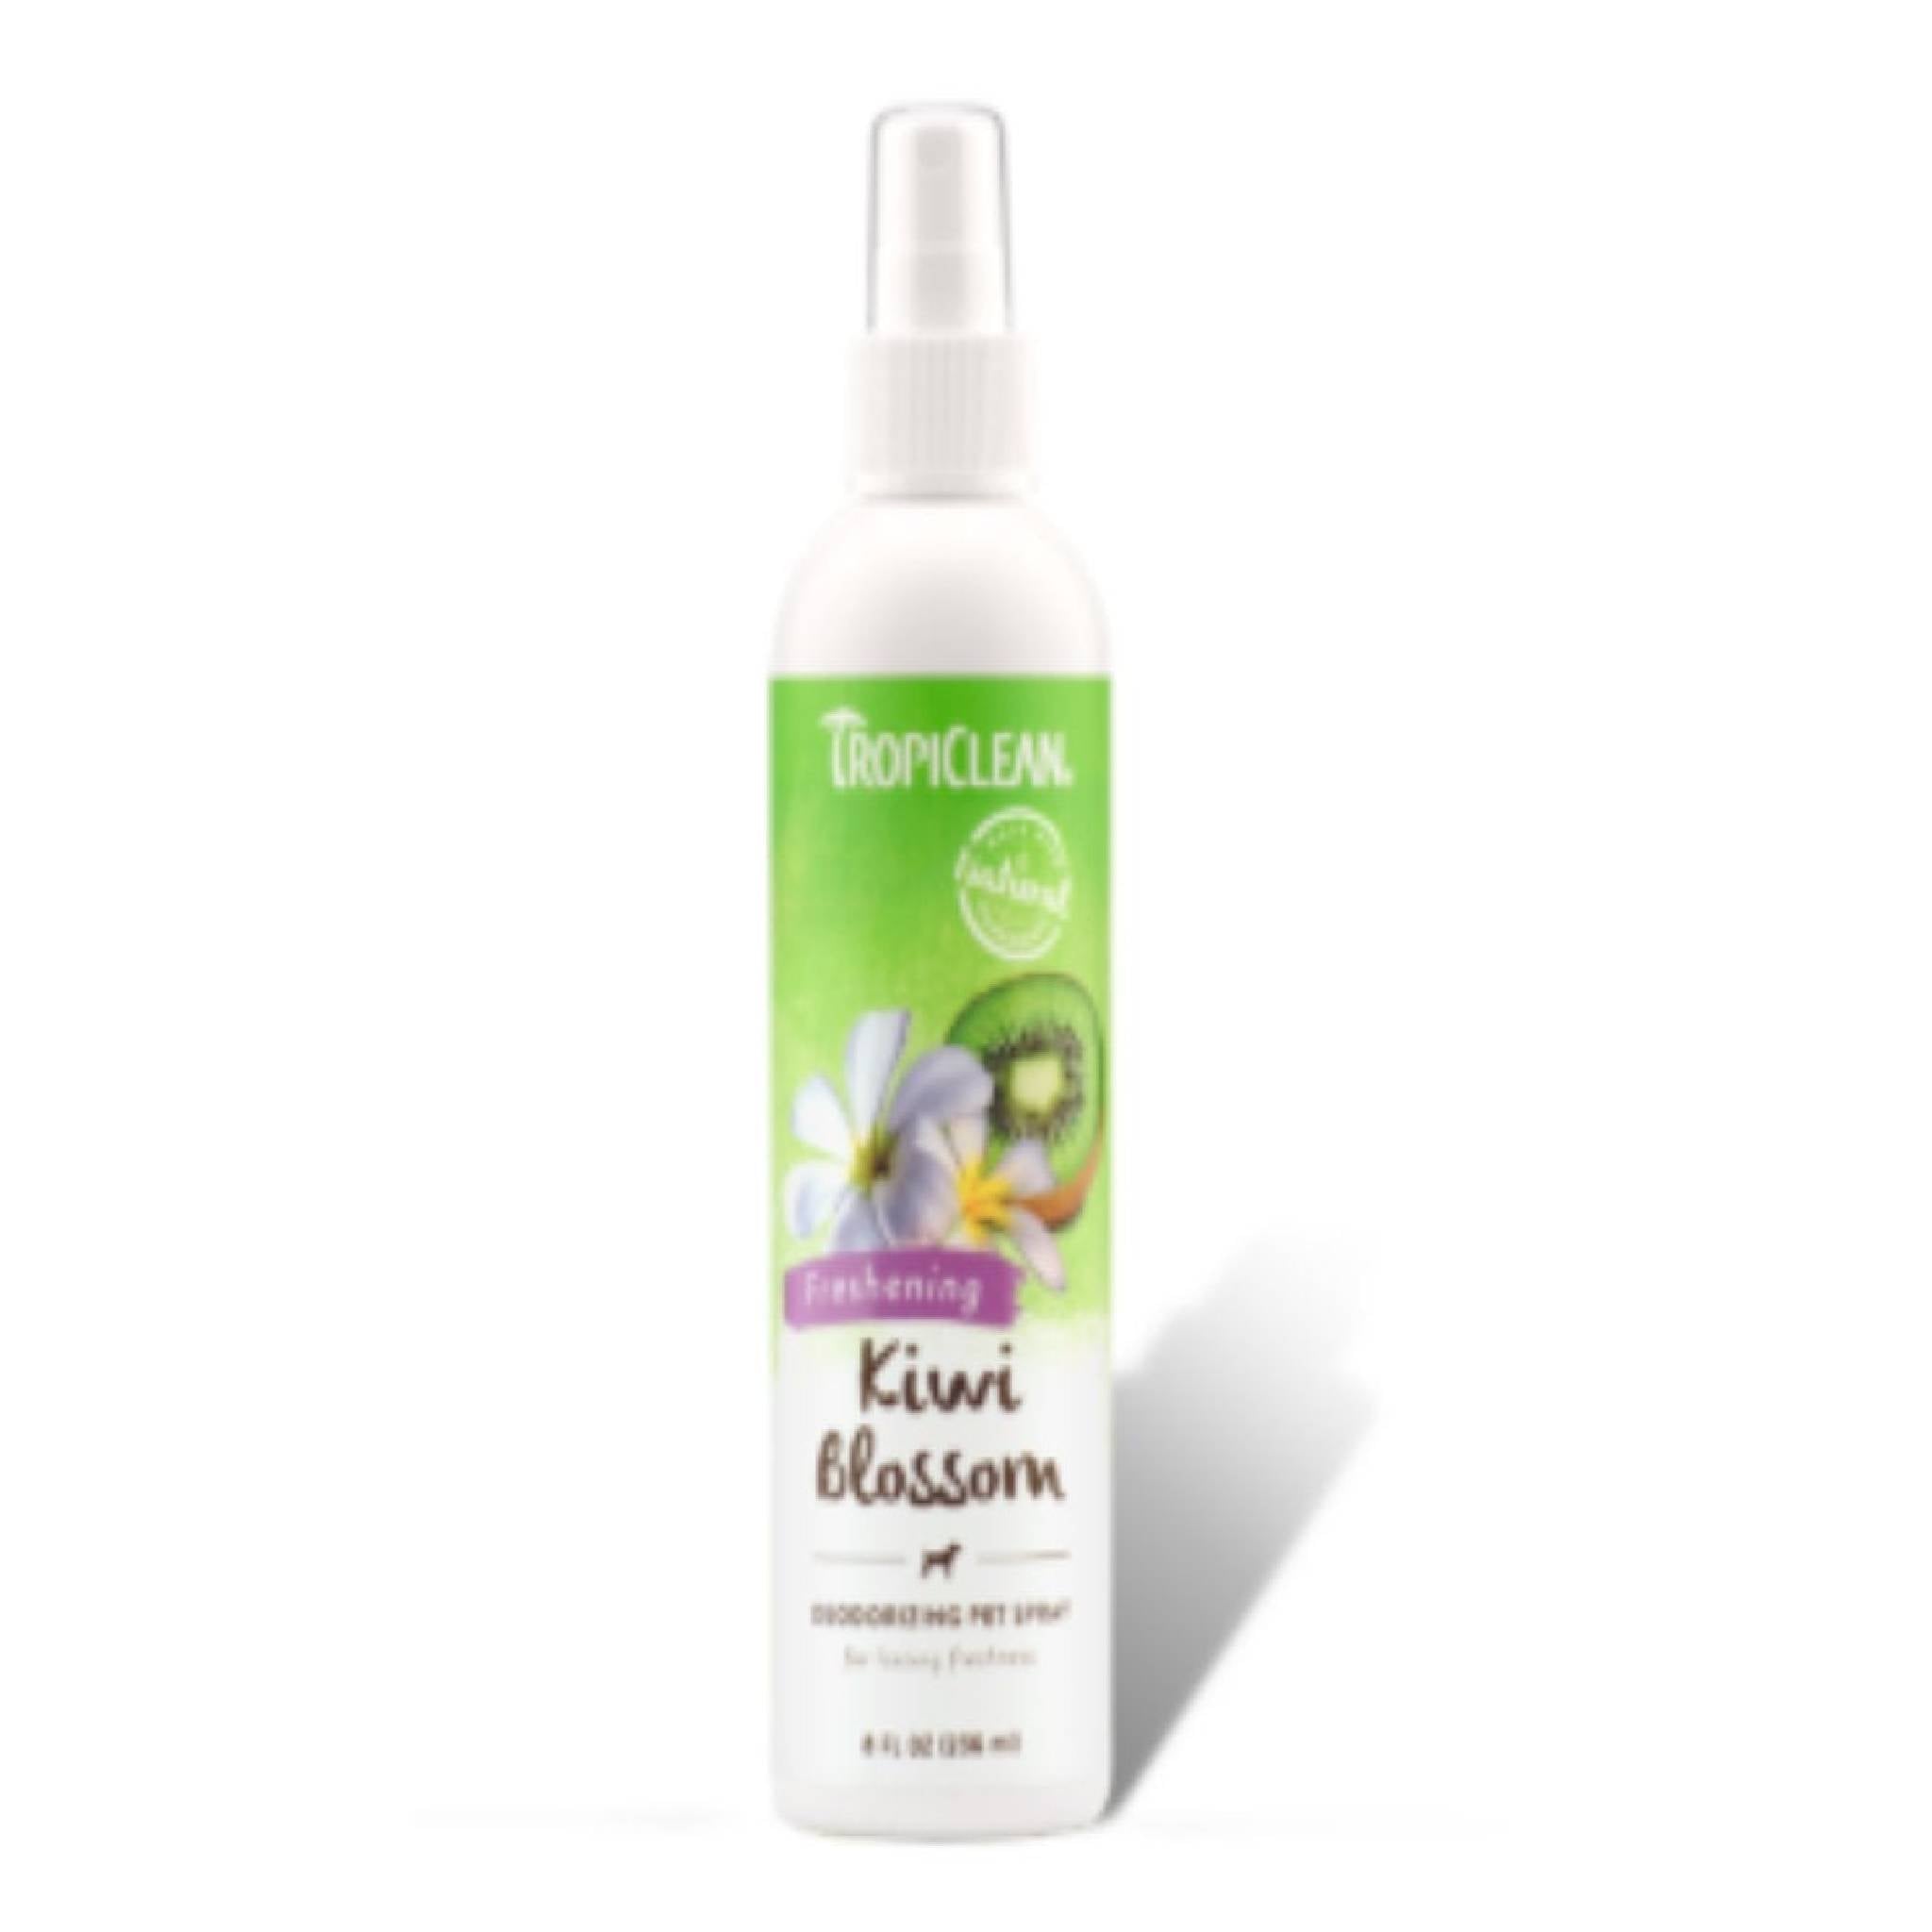 TropiClean Kiwi Blossom (Deodorizing) Pet Cologne Spray